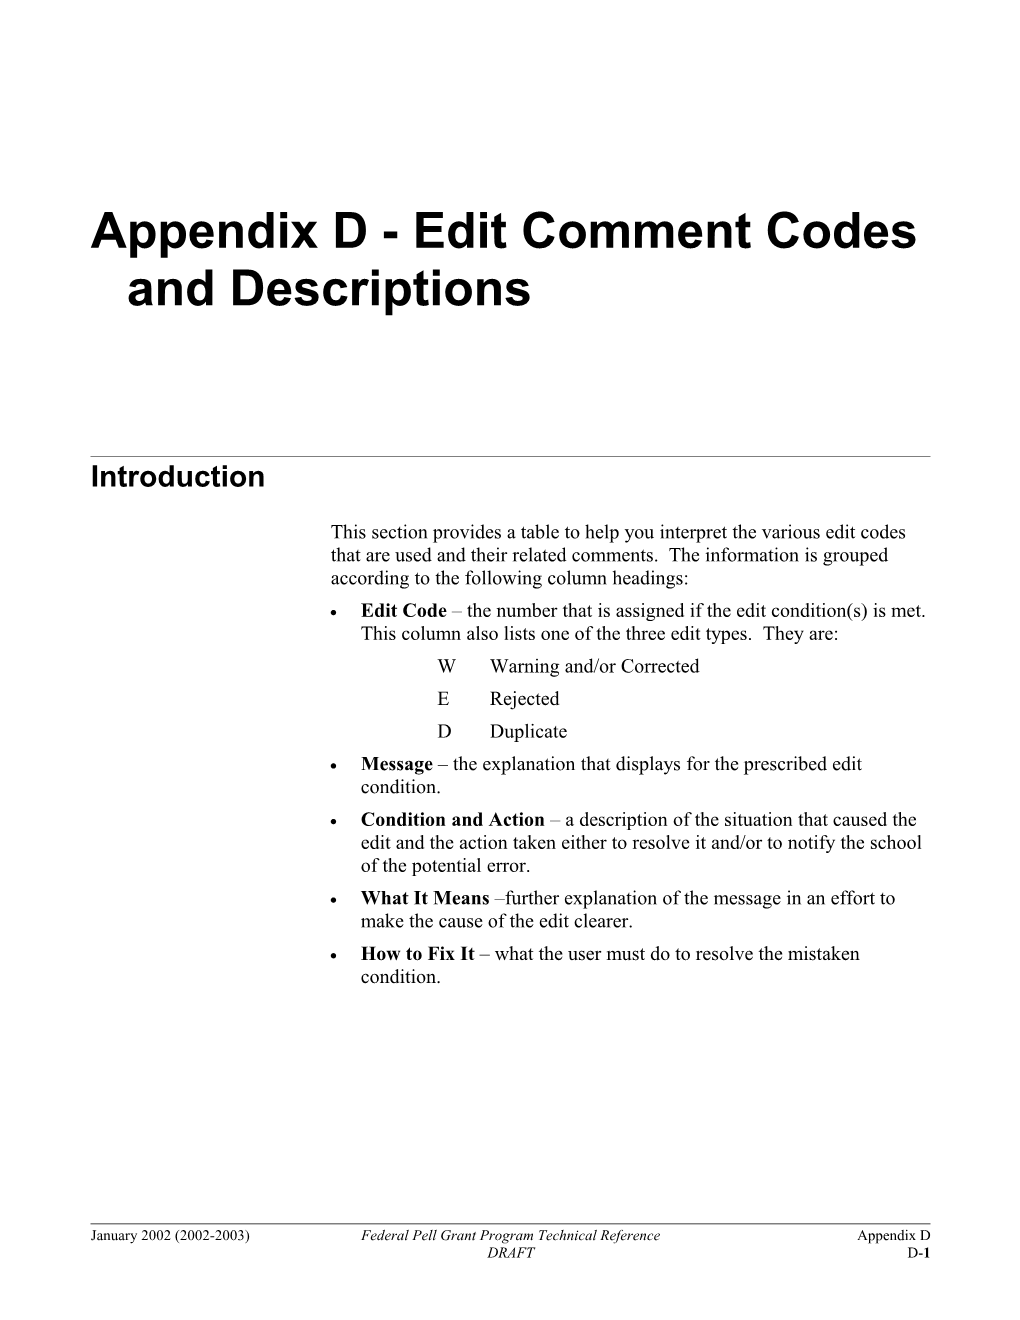 Appendix D - Edit Comment Codes and Descriptions